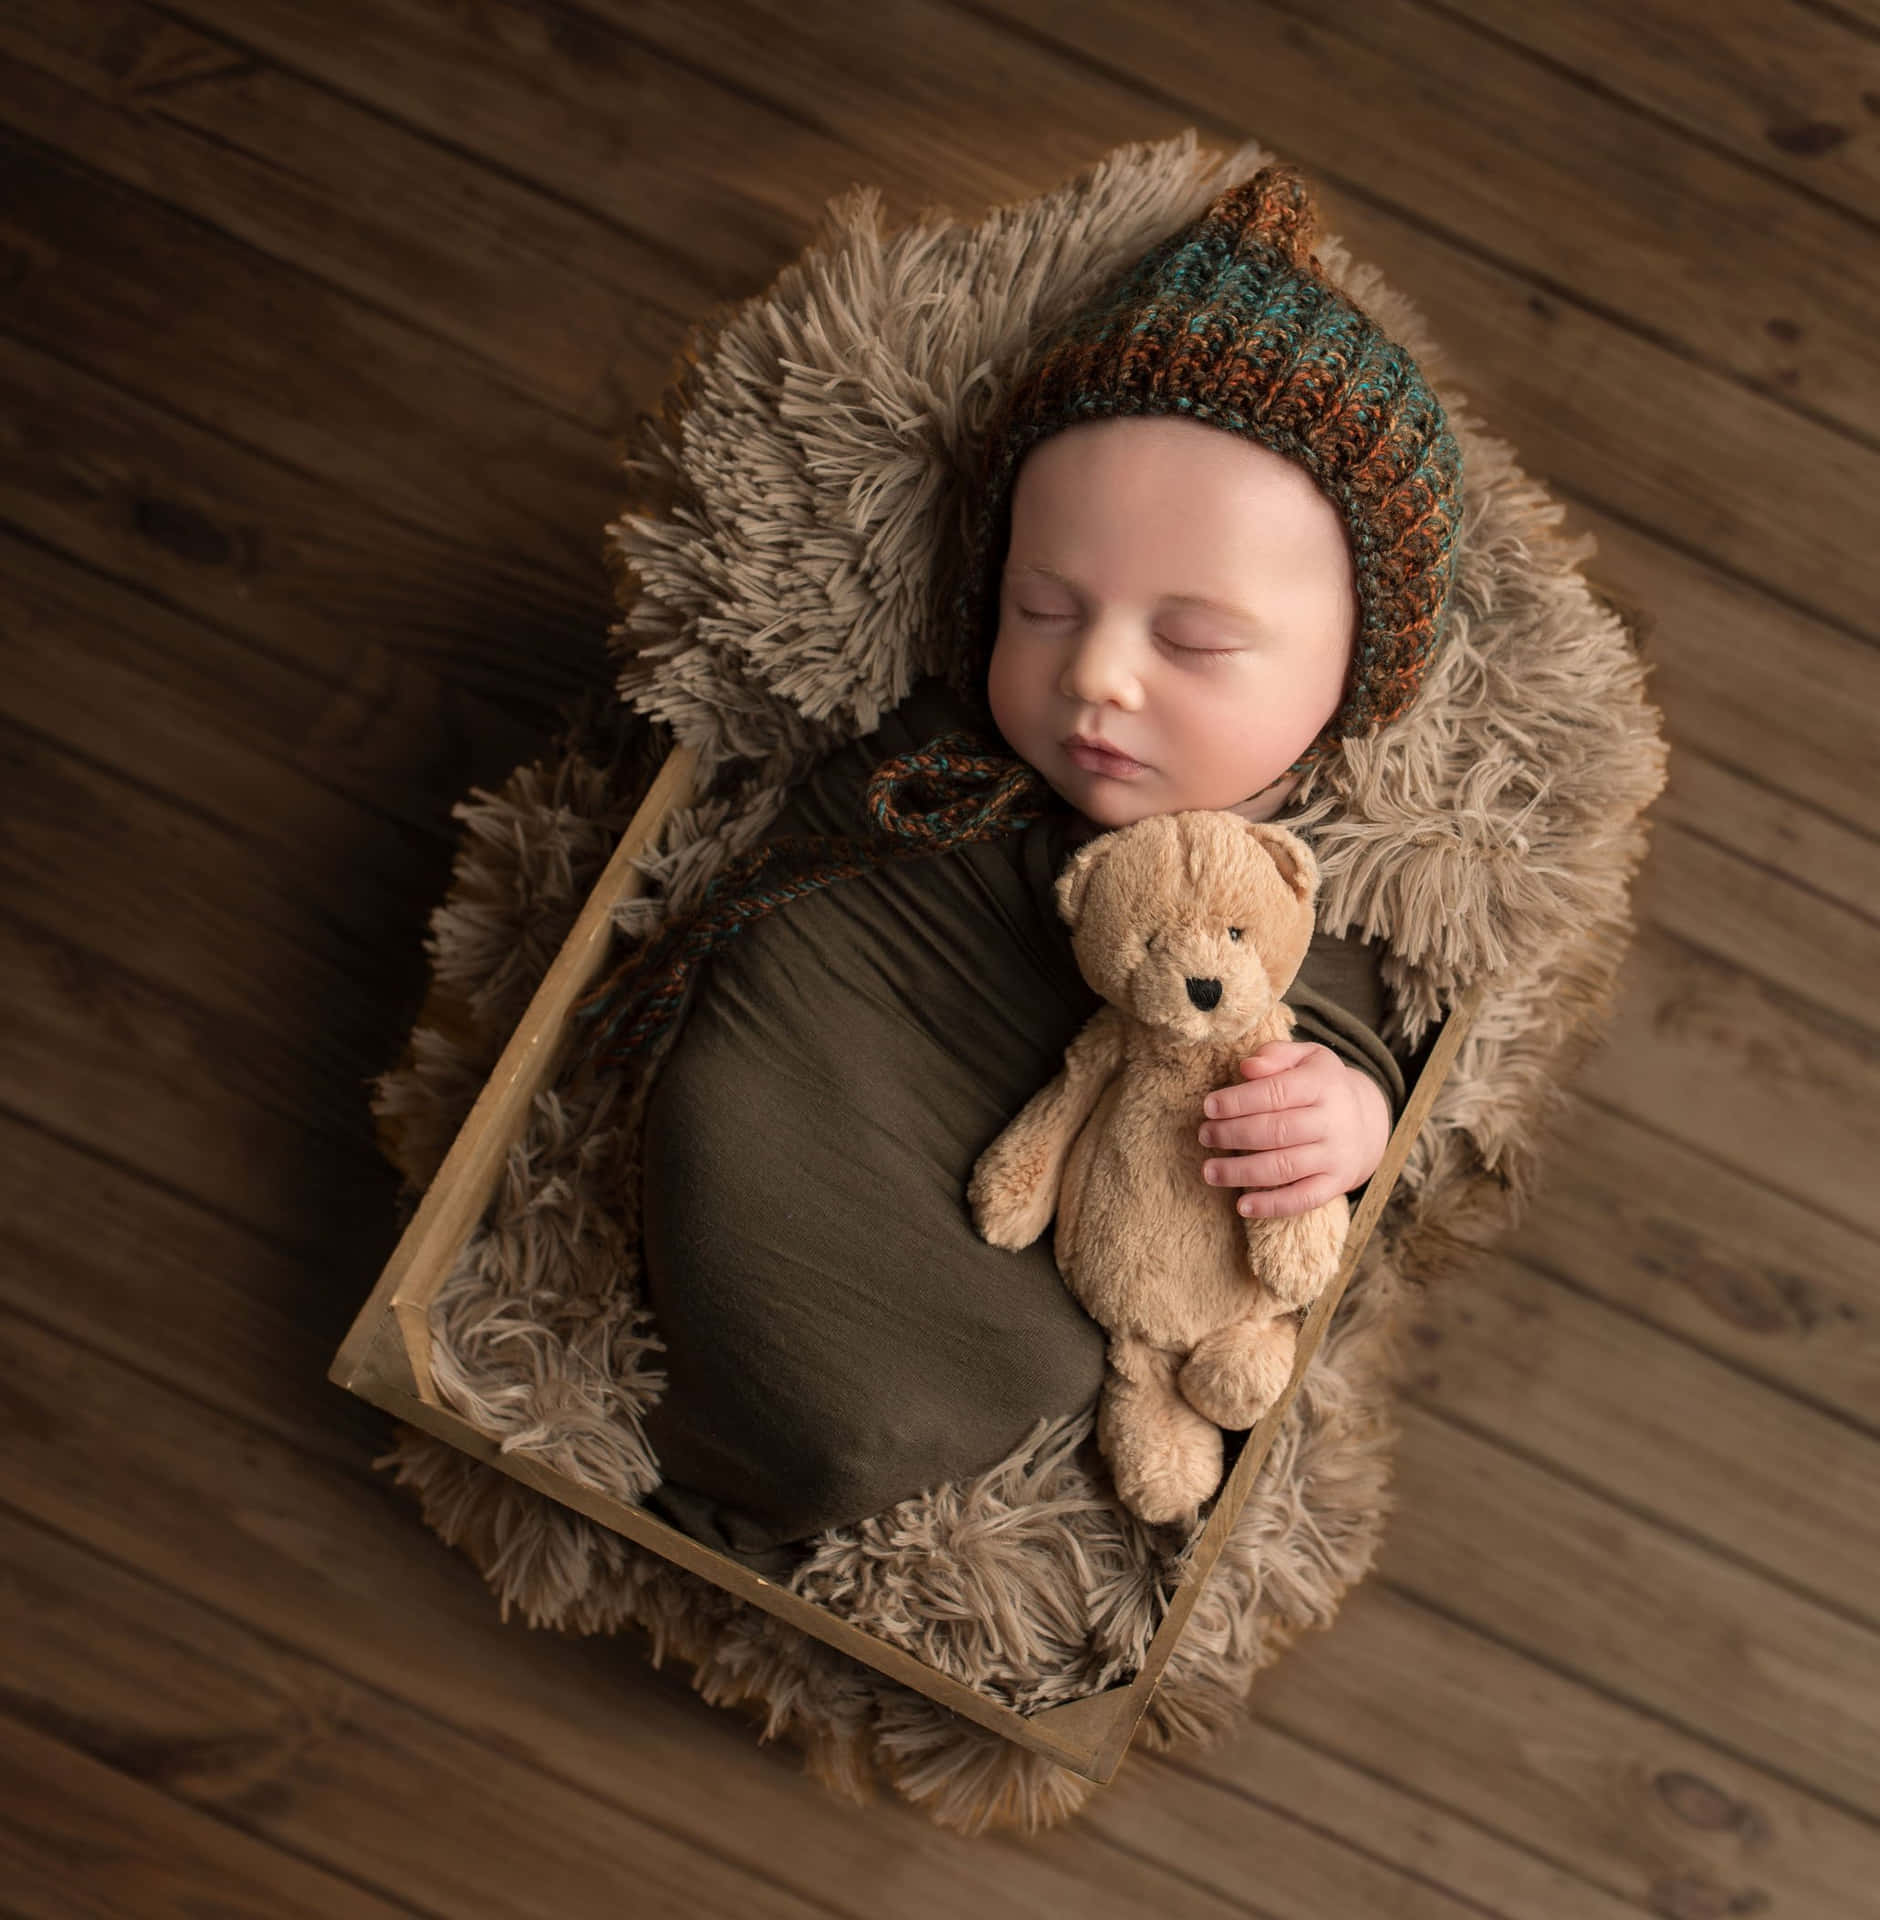 Cherubic Newborn Boy Resting Peacefully